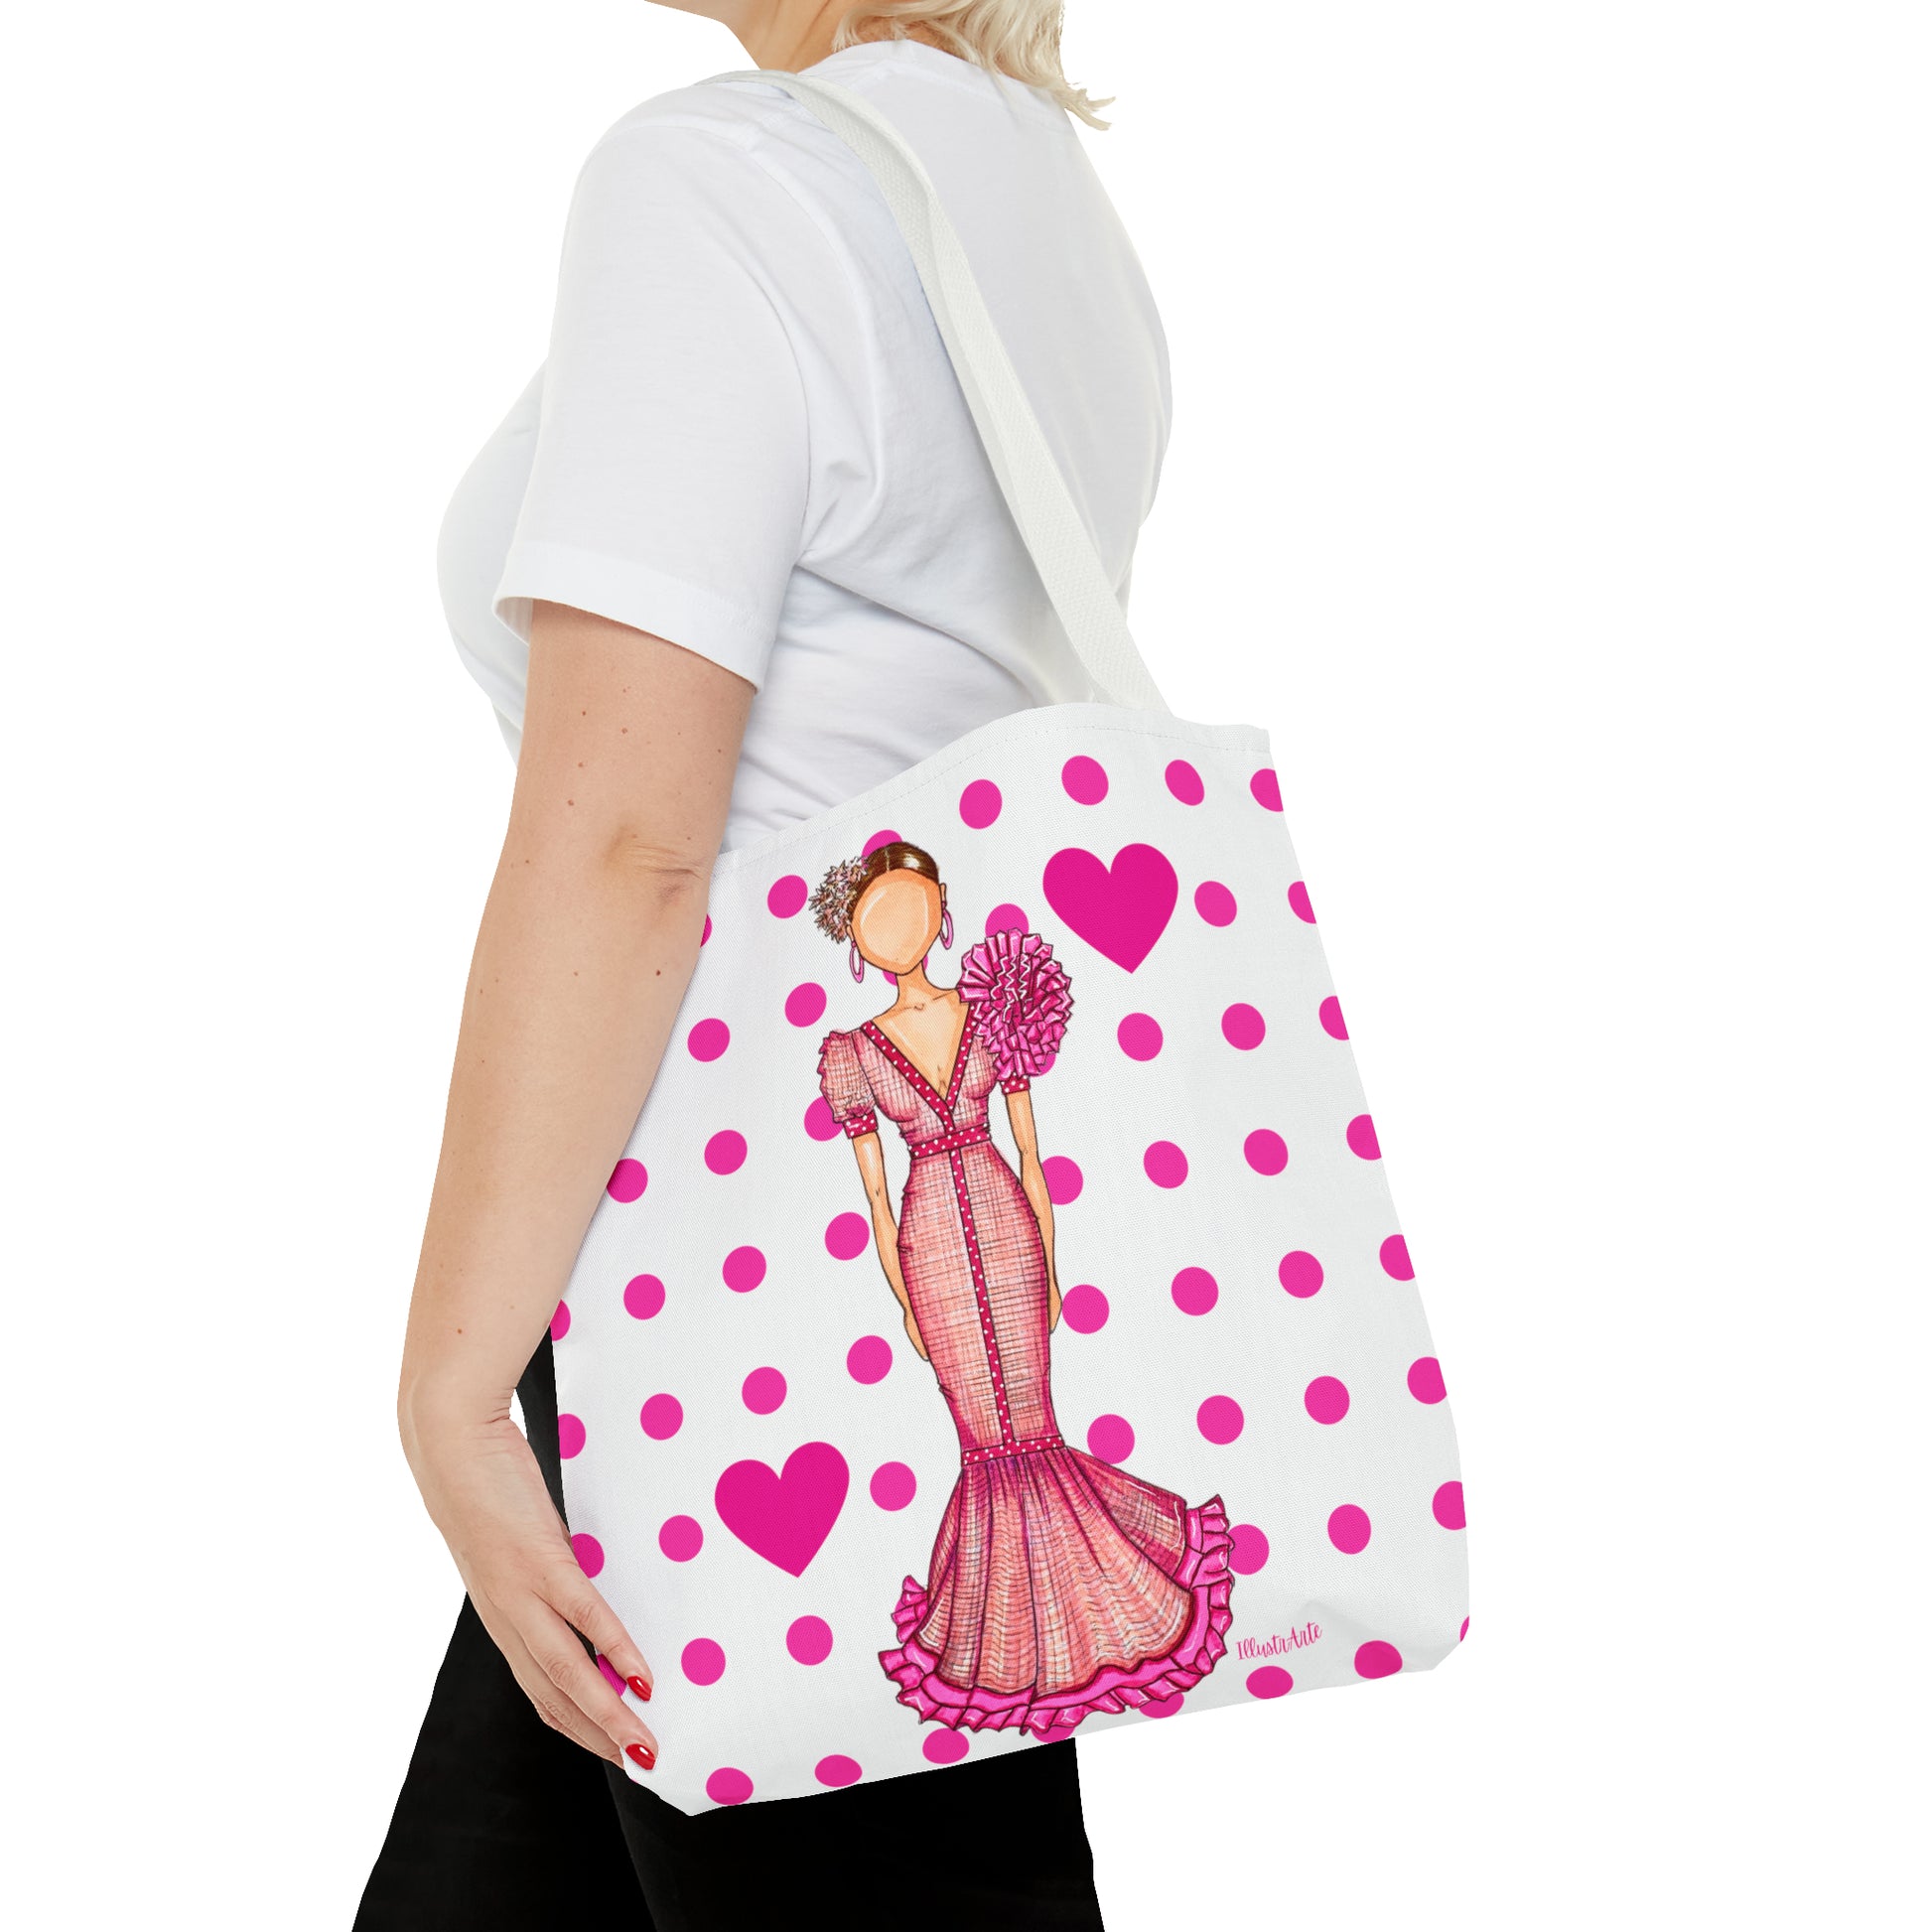 a woman carrying a pink polka dot purse